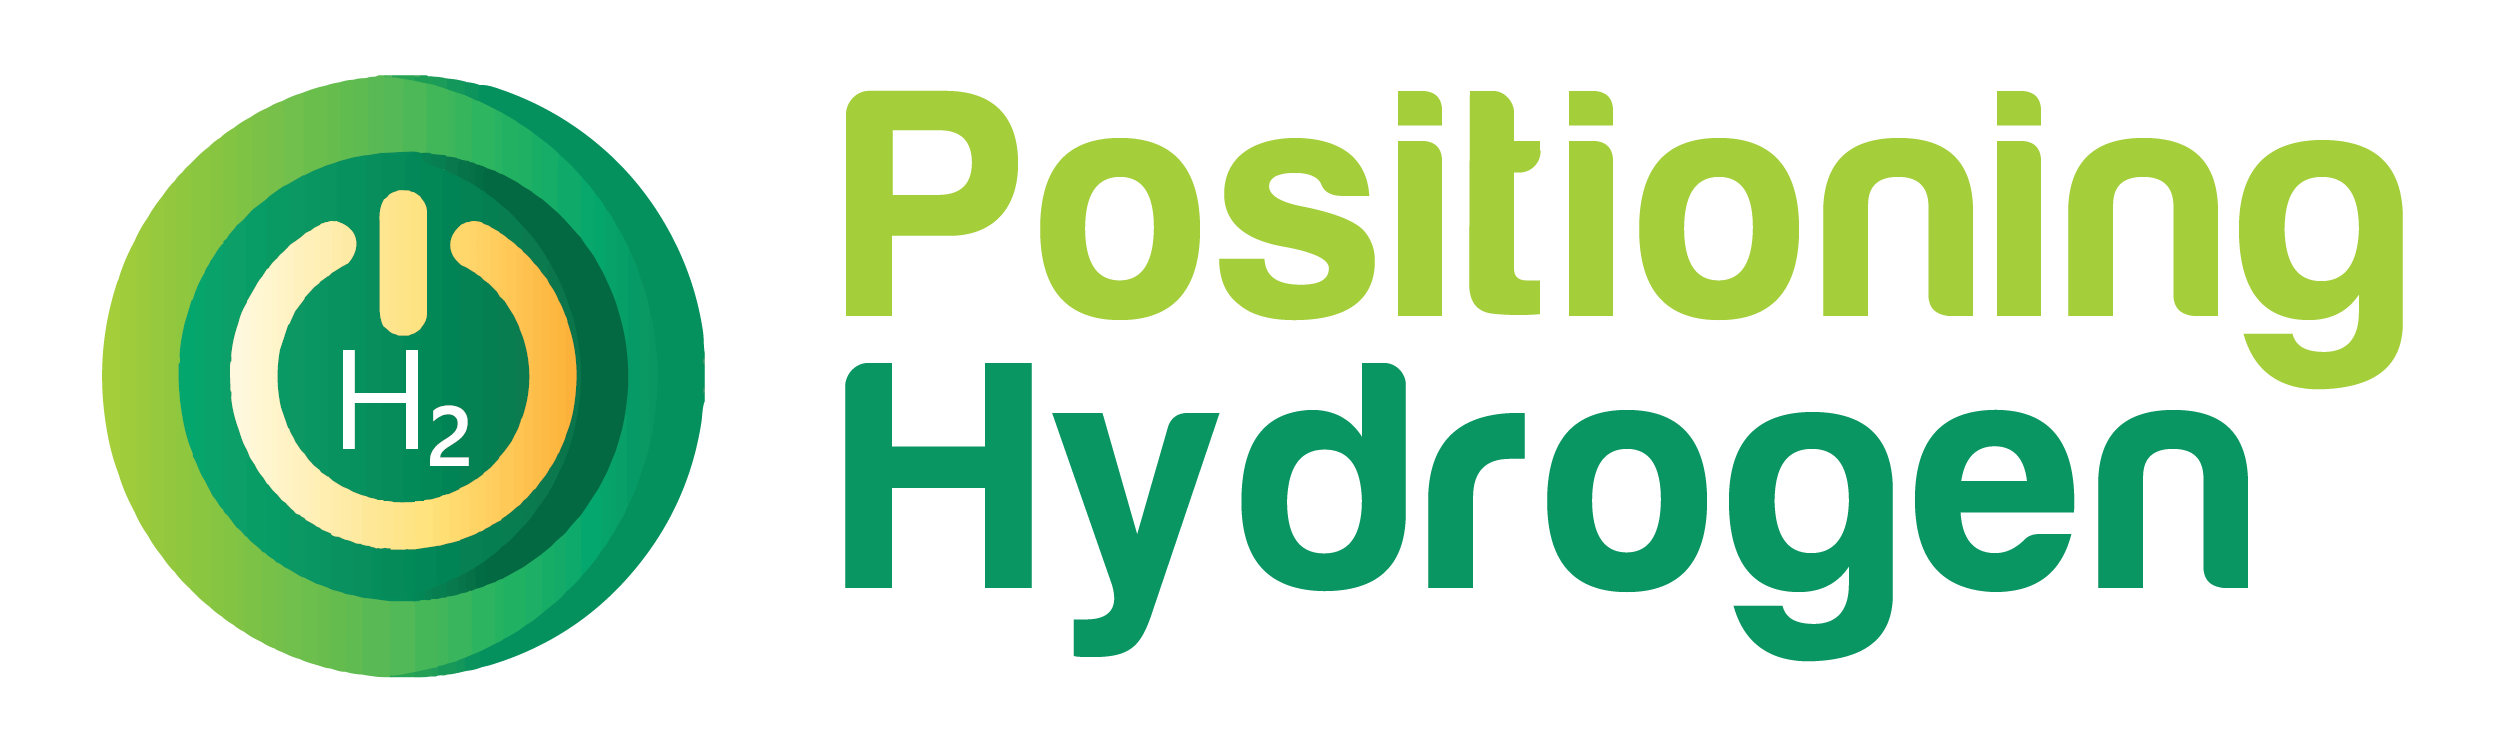 Positioning Hydrogen 2022 Conference Logo.png